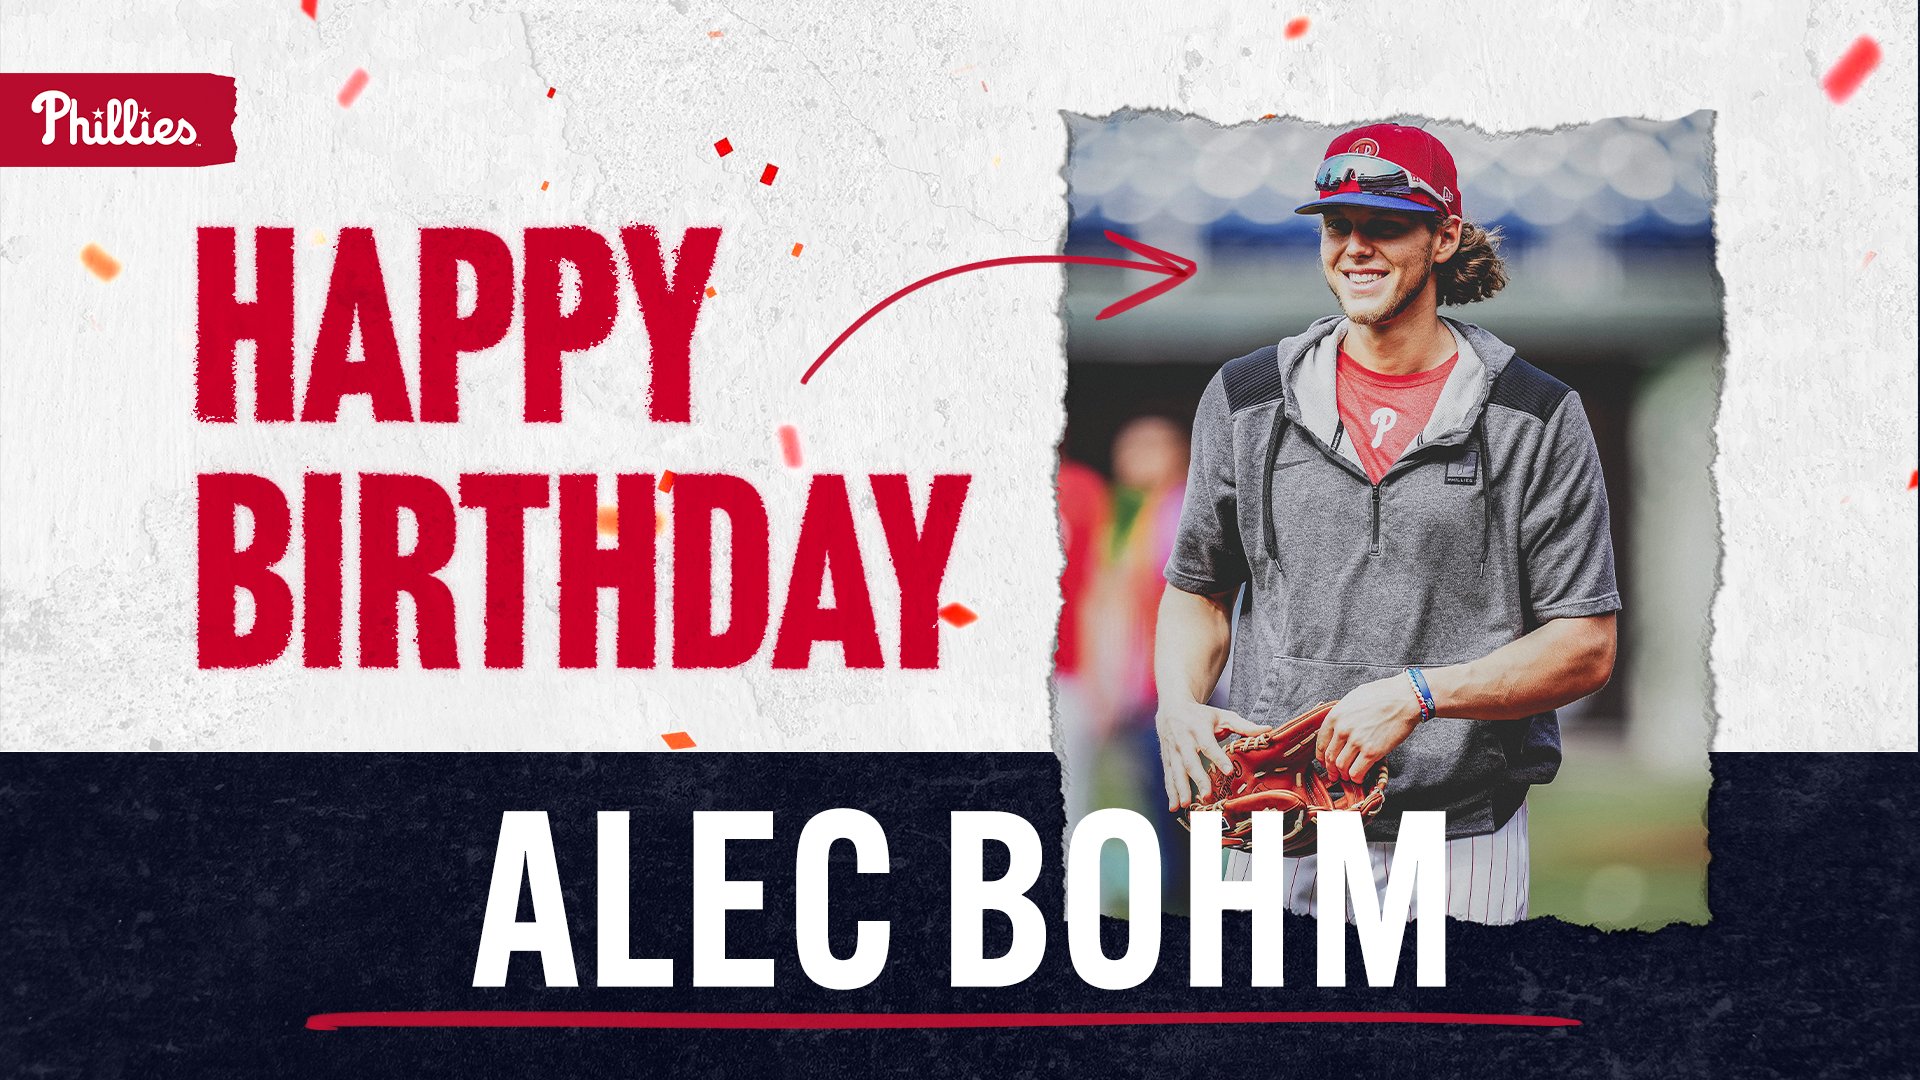 Philadelphia Phillies on X: Join us in wishing Alec Bohm a happy